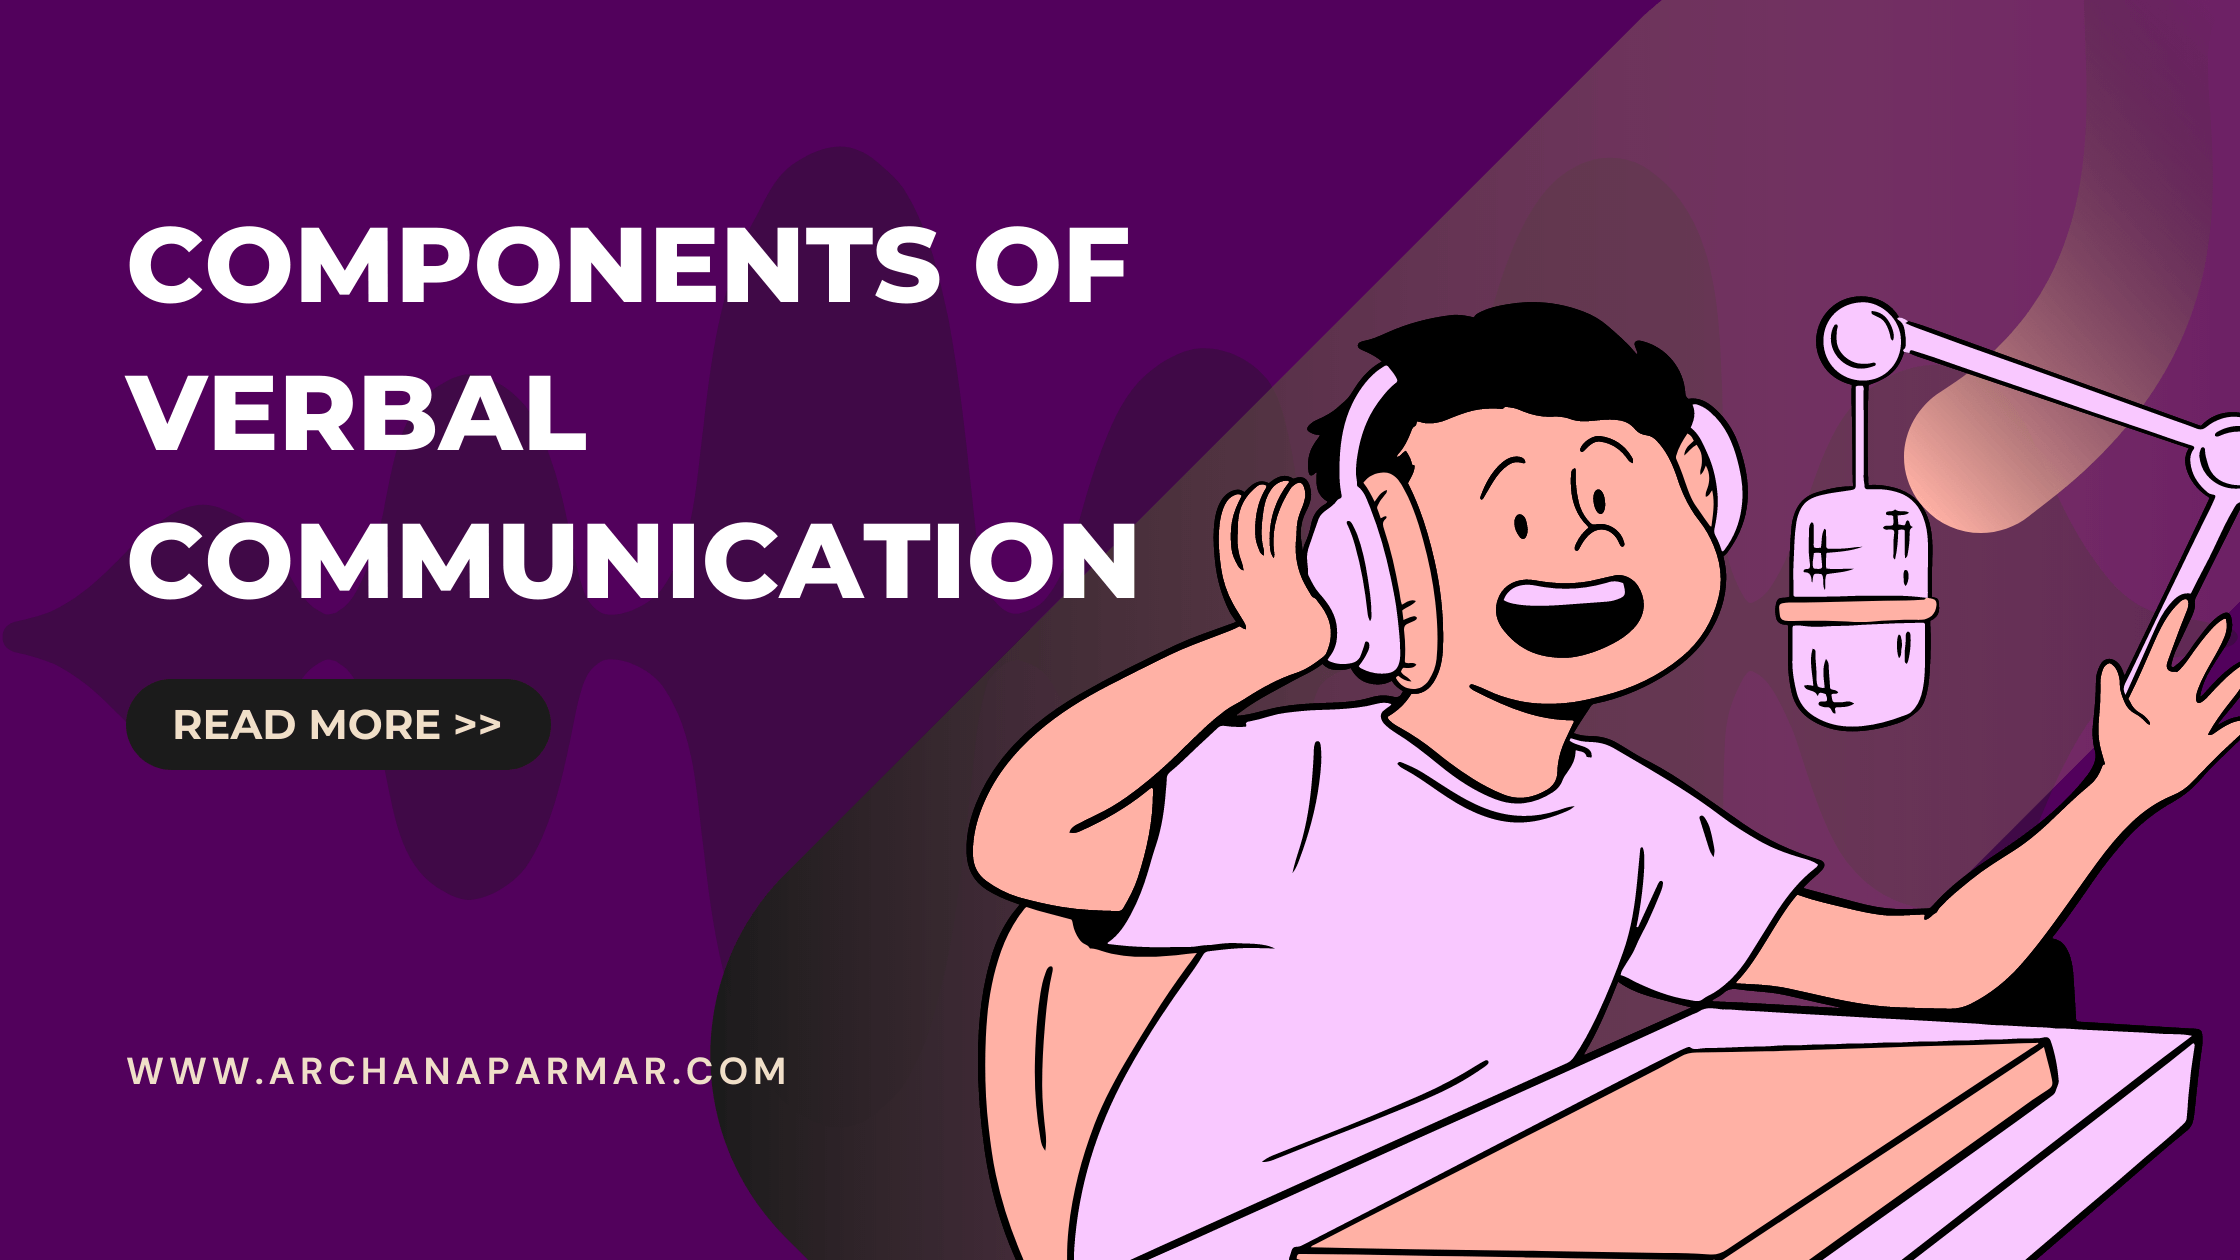 Effective verbal communication